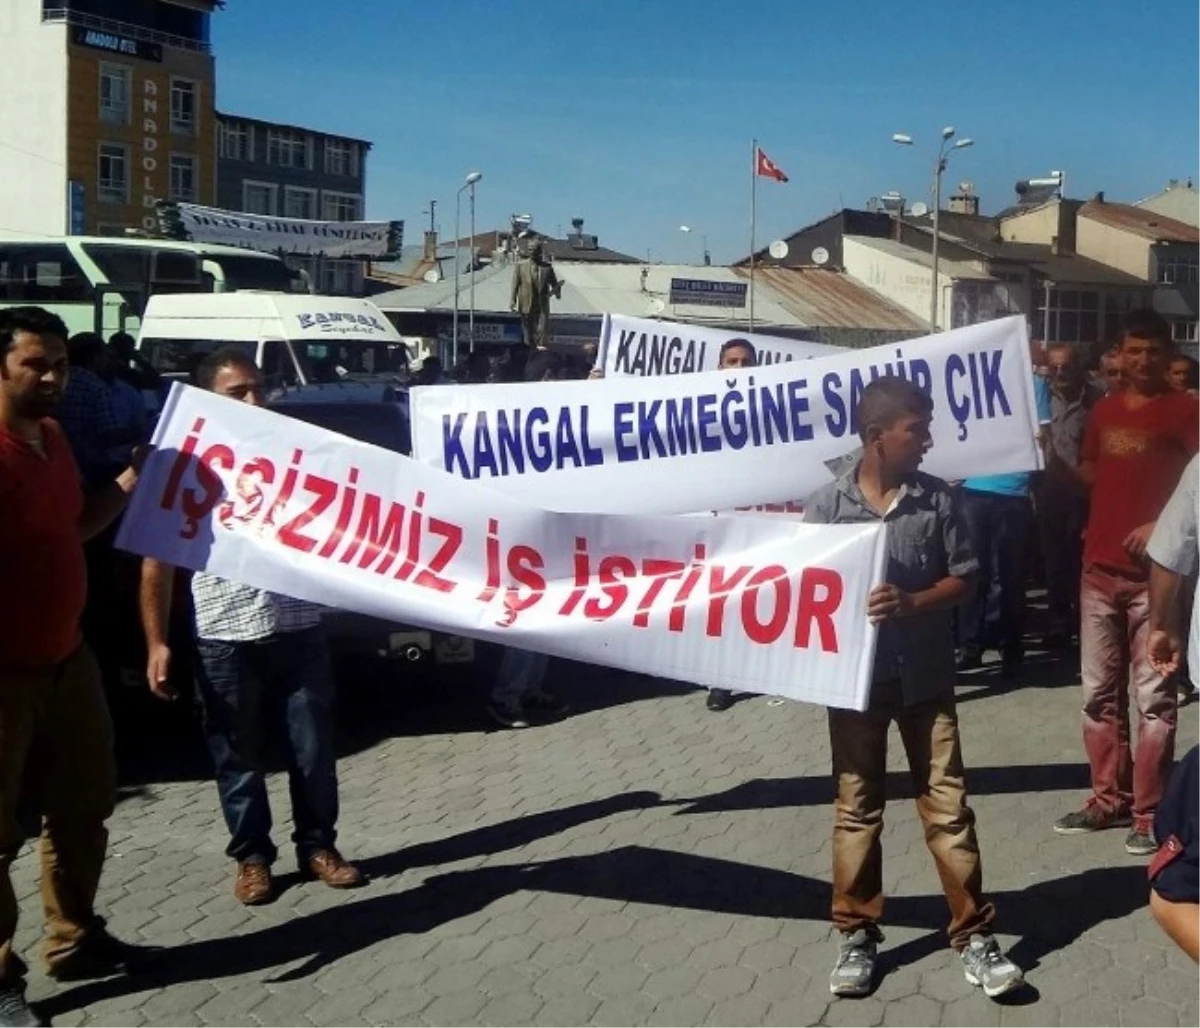 Kangal Halkından Dışarıdan İşçi Alımı Protestosu